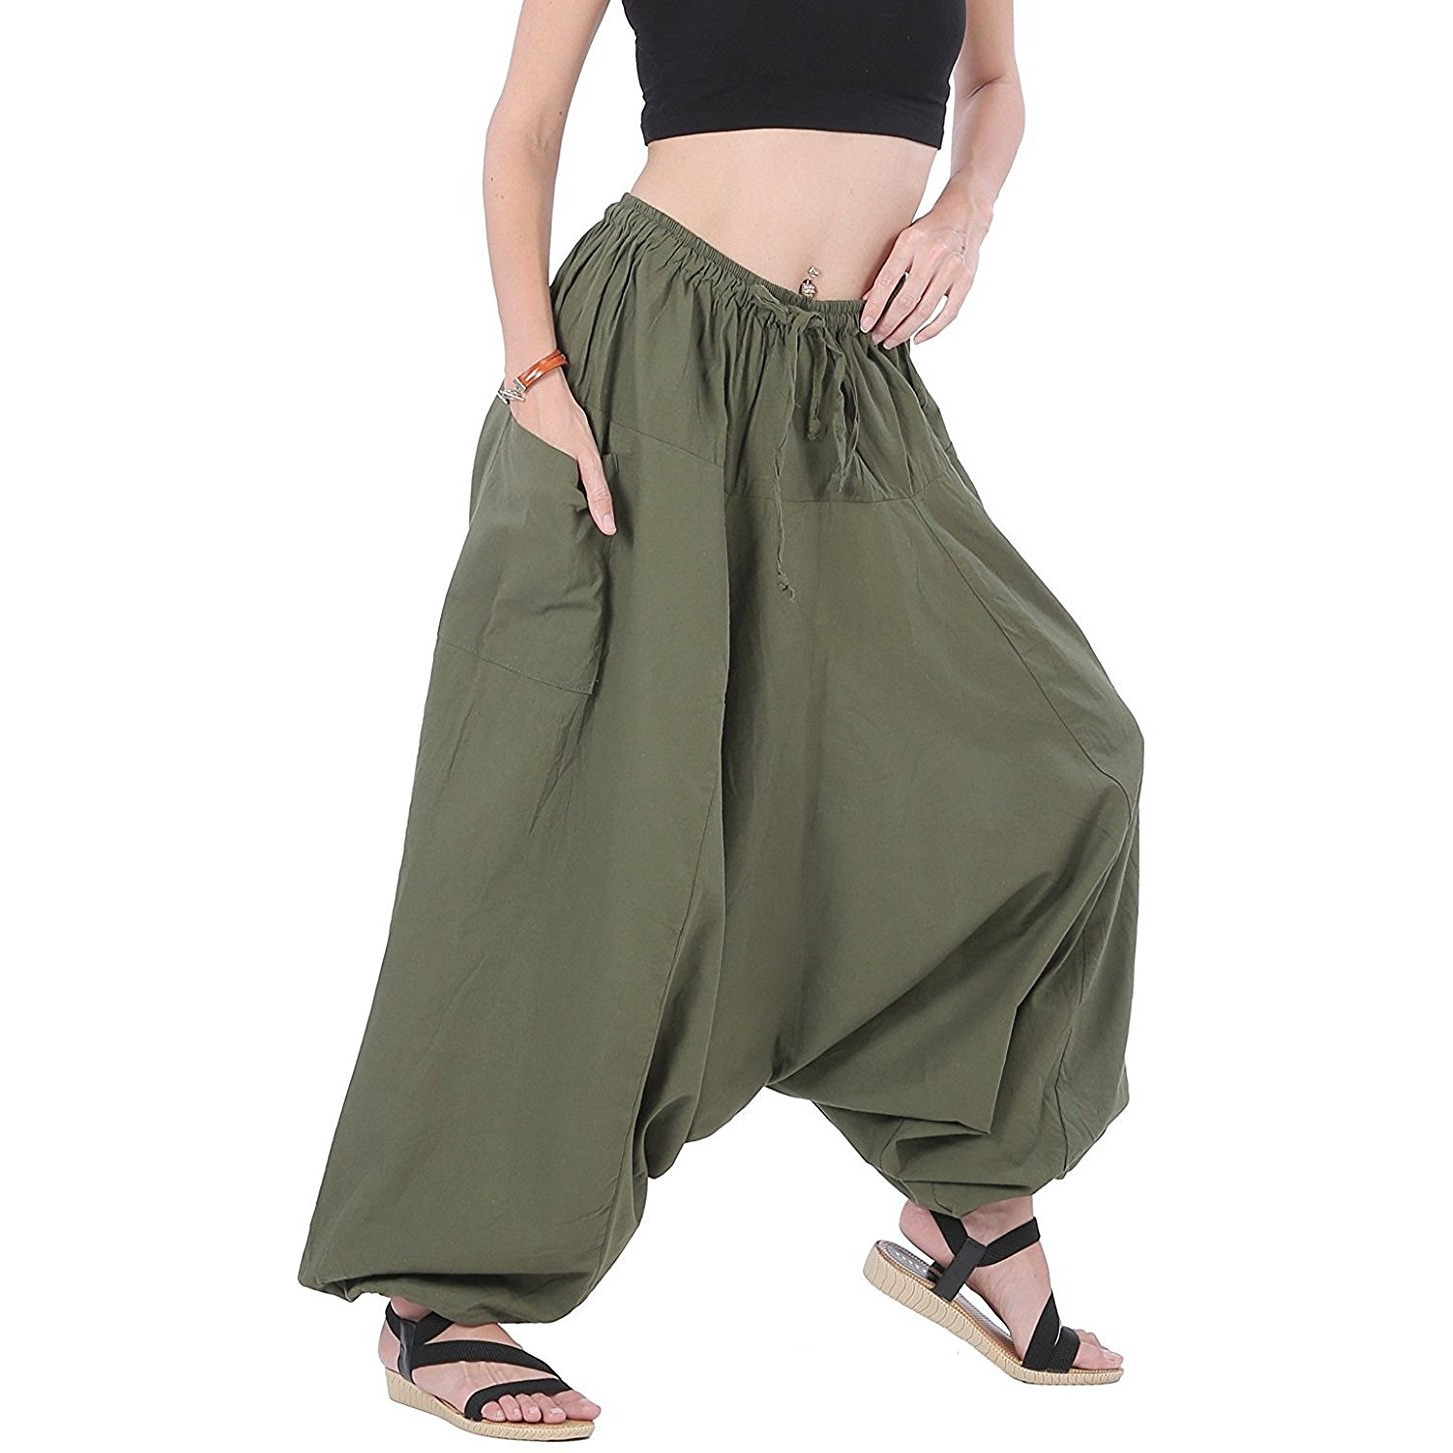 Winmaarc 100% Cotton Baggy Boho Gypsy Hippie Harem Pants Plus Size